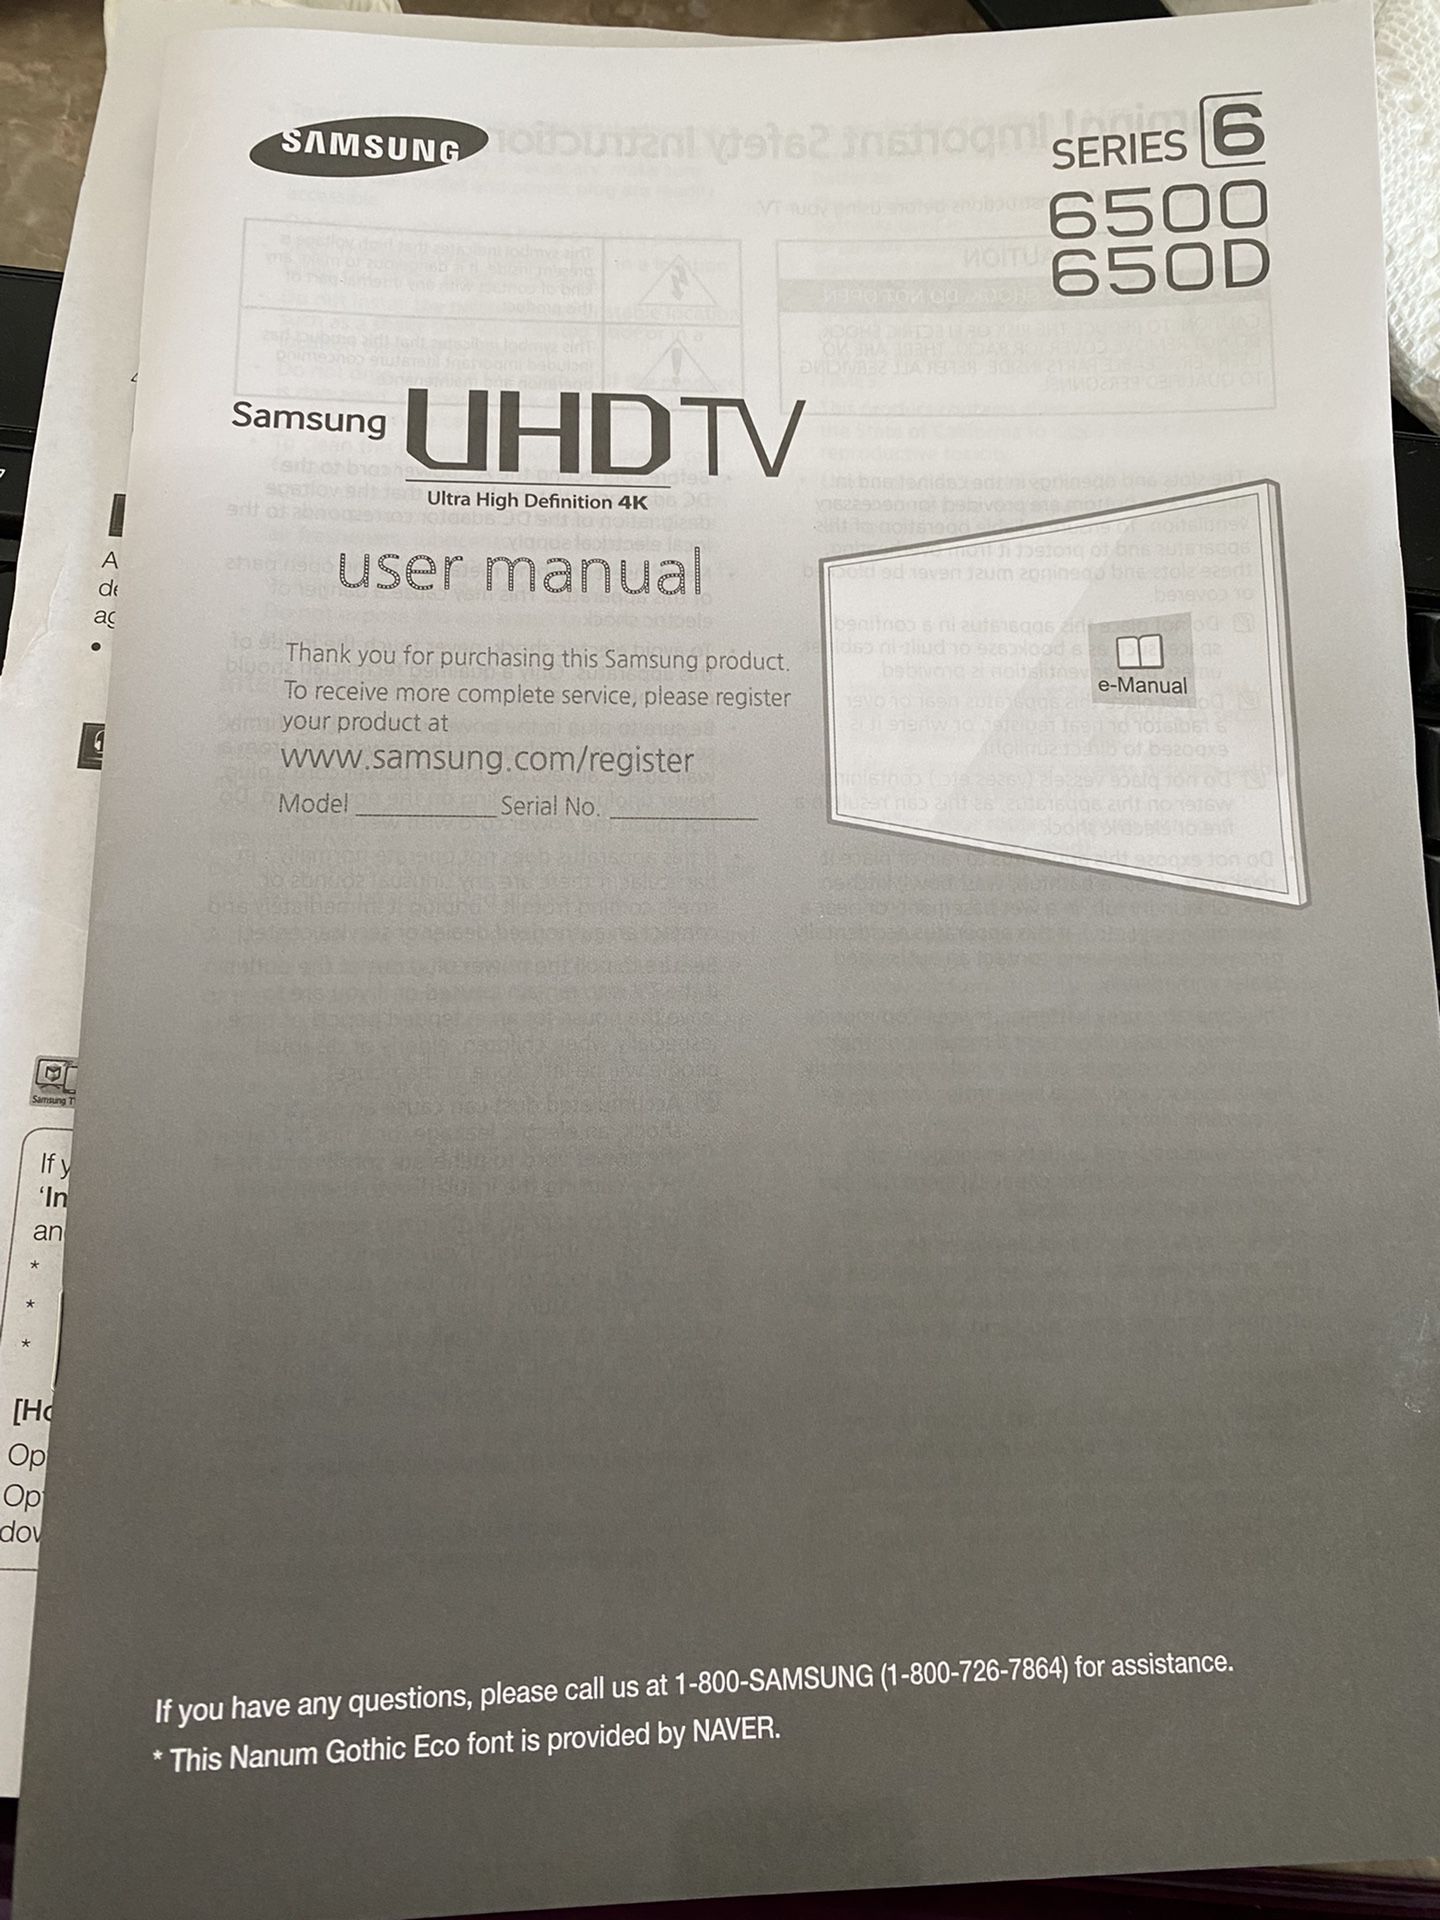 Samsung UN55JU6500 55-Inch 4K Ultra HD Smart LED TV